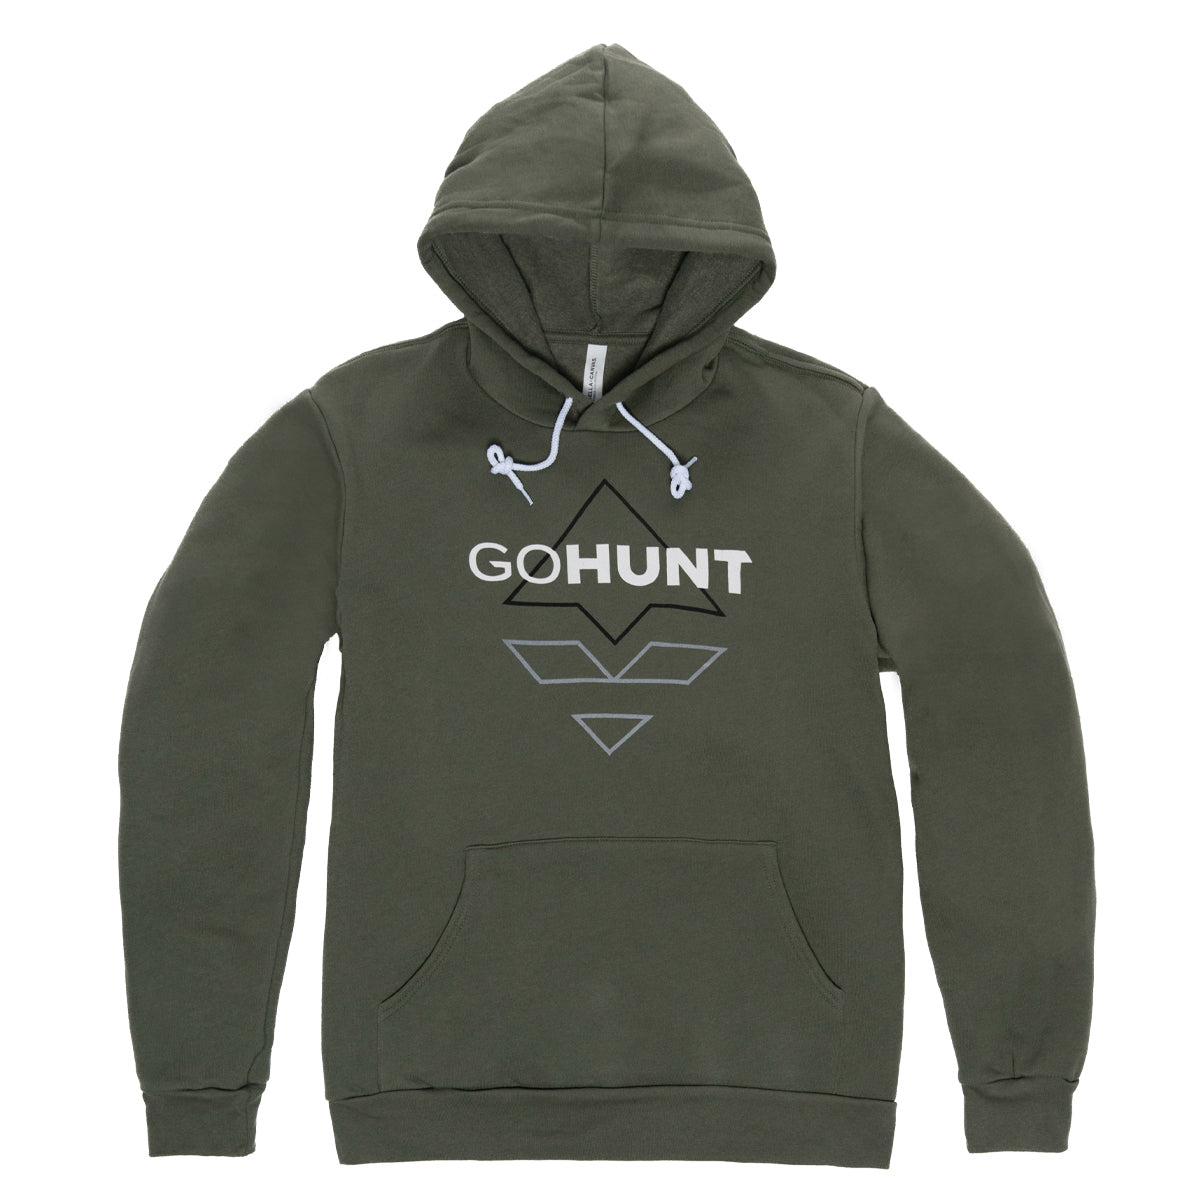 GOHUNT Logo Hoodie in Military Green by GOHUNT | GOHUNT - GOHUNT Shop